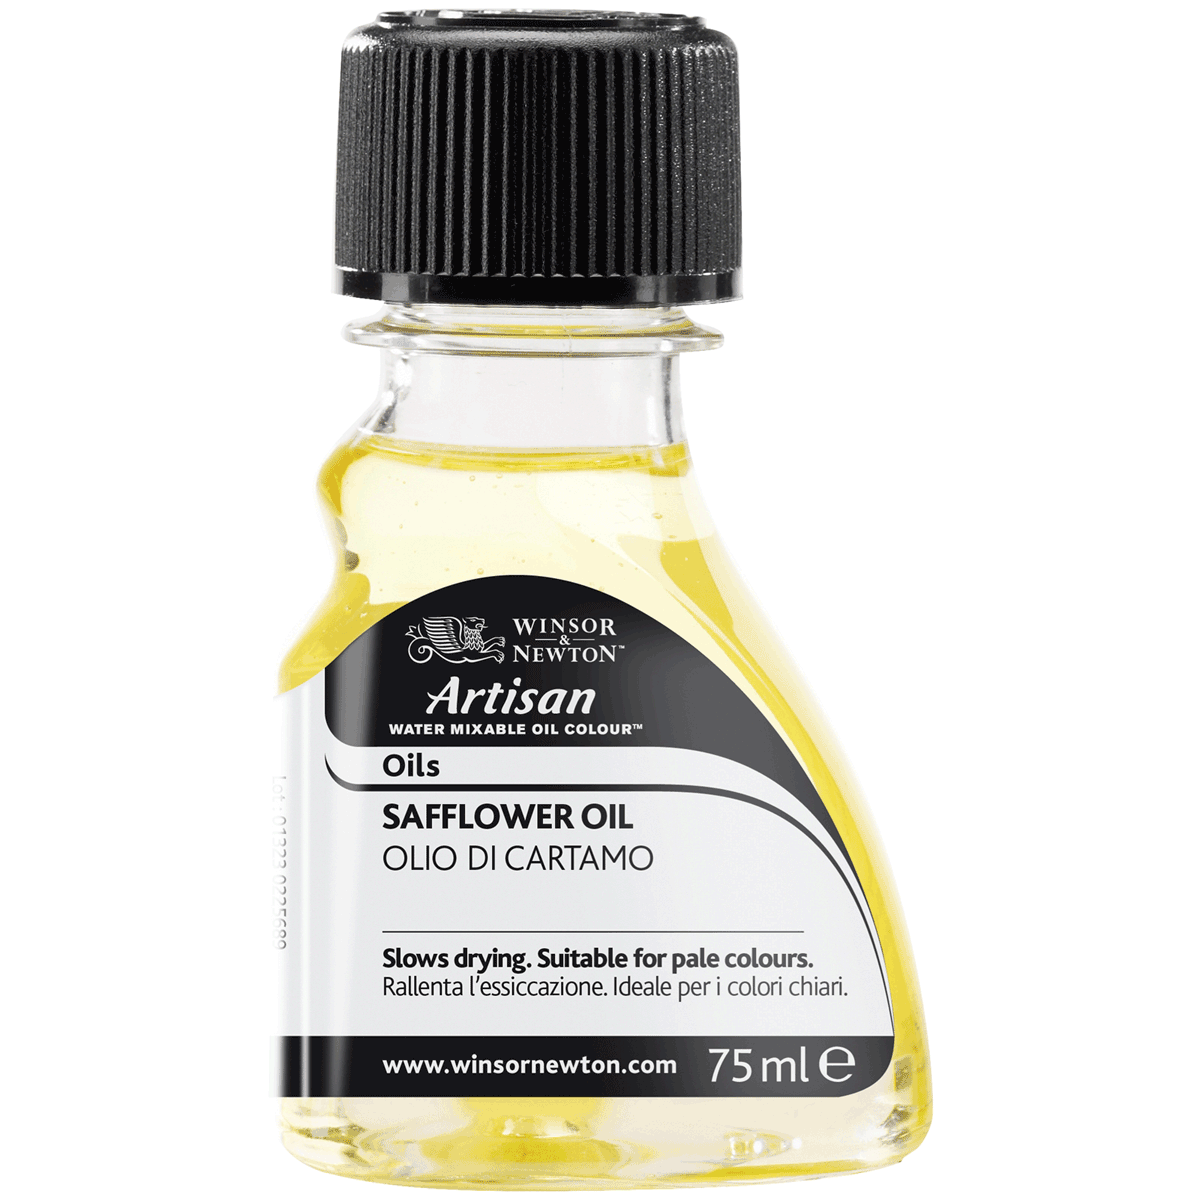 Artisan Water Mixable Safflower Oil